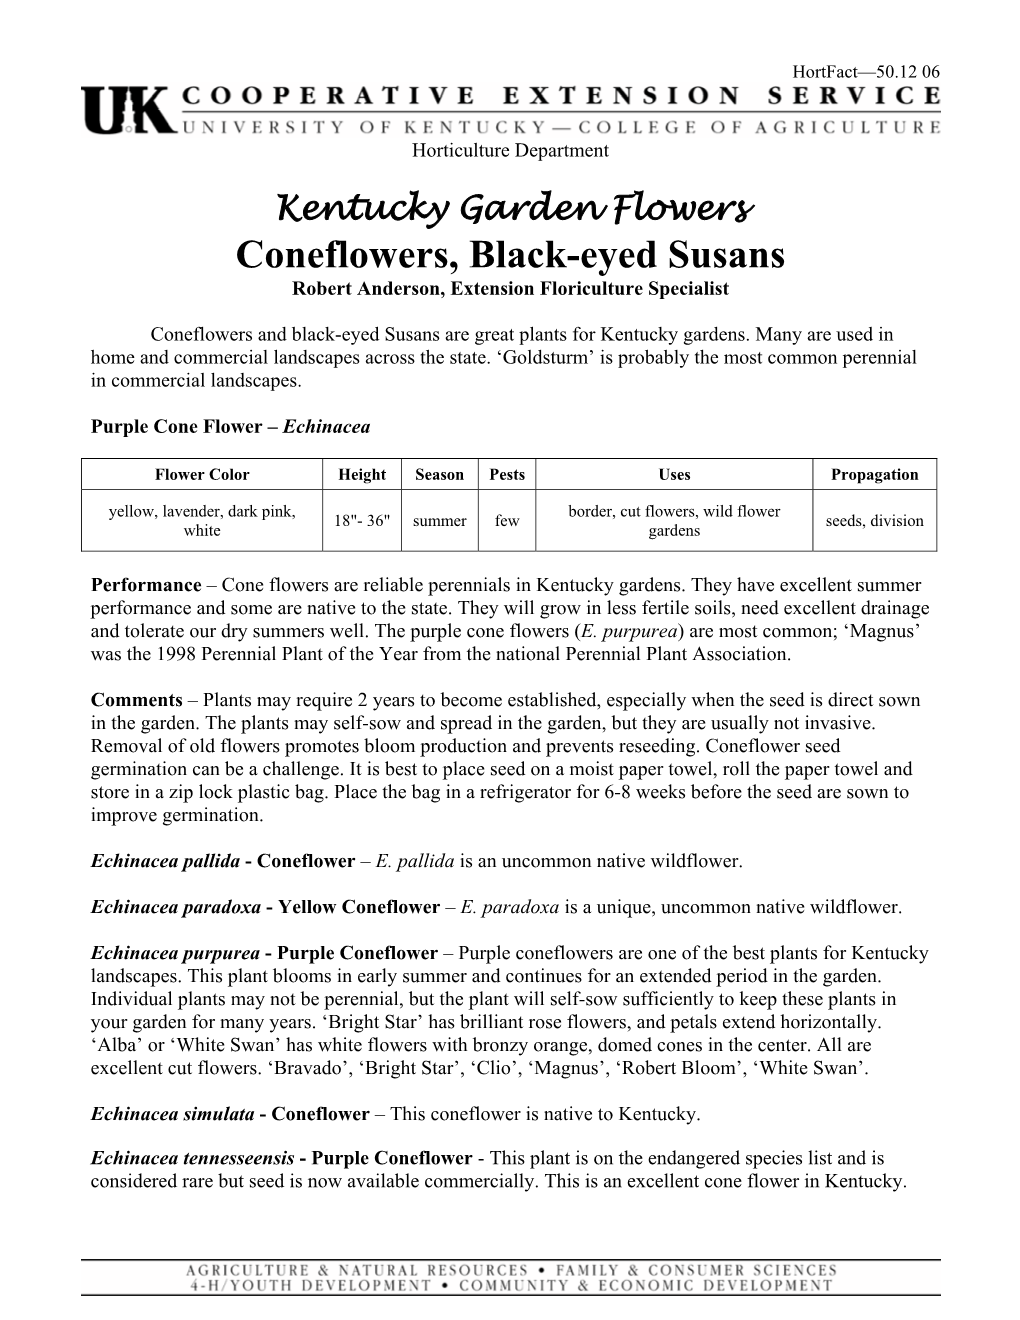 Coneflowers, Black-Eyed Susans Robert Anderson, Extension Floriculture Specialist